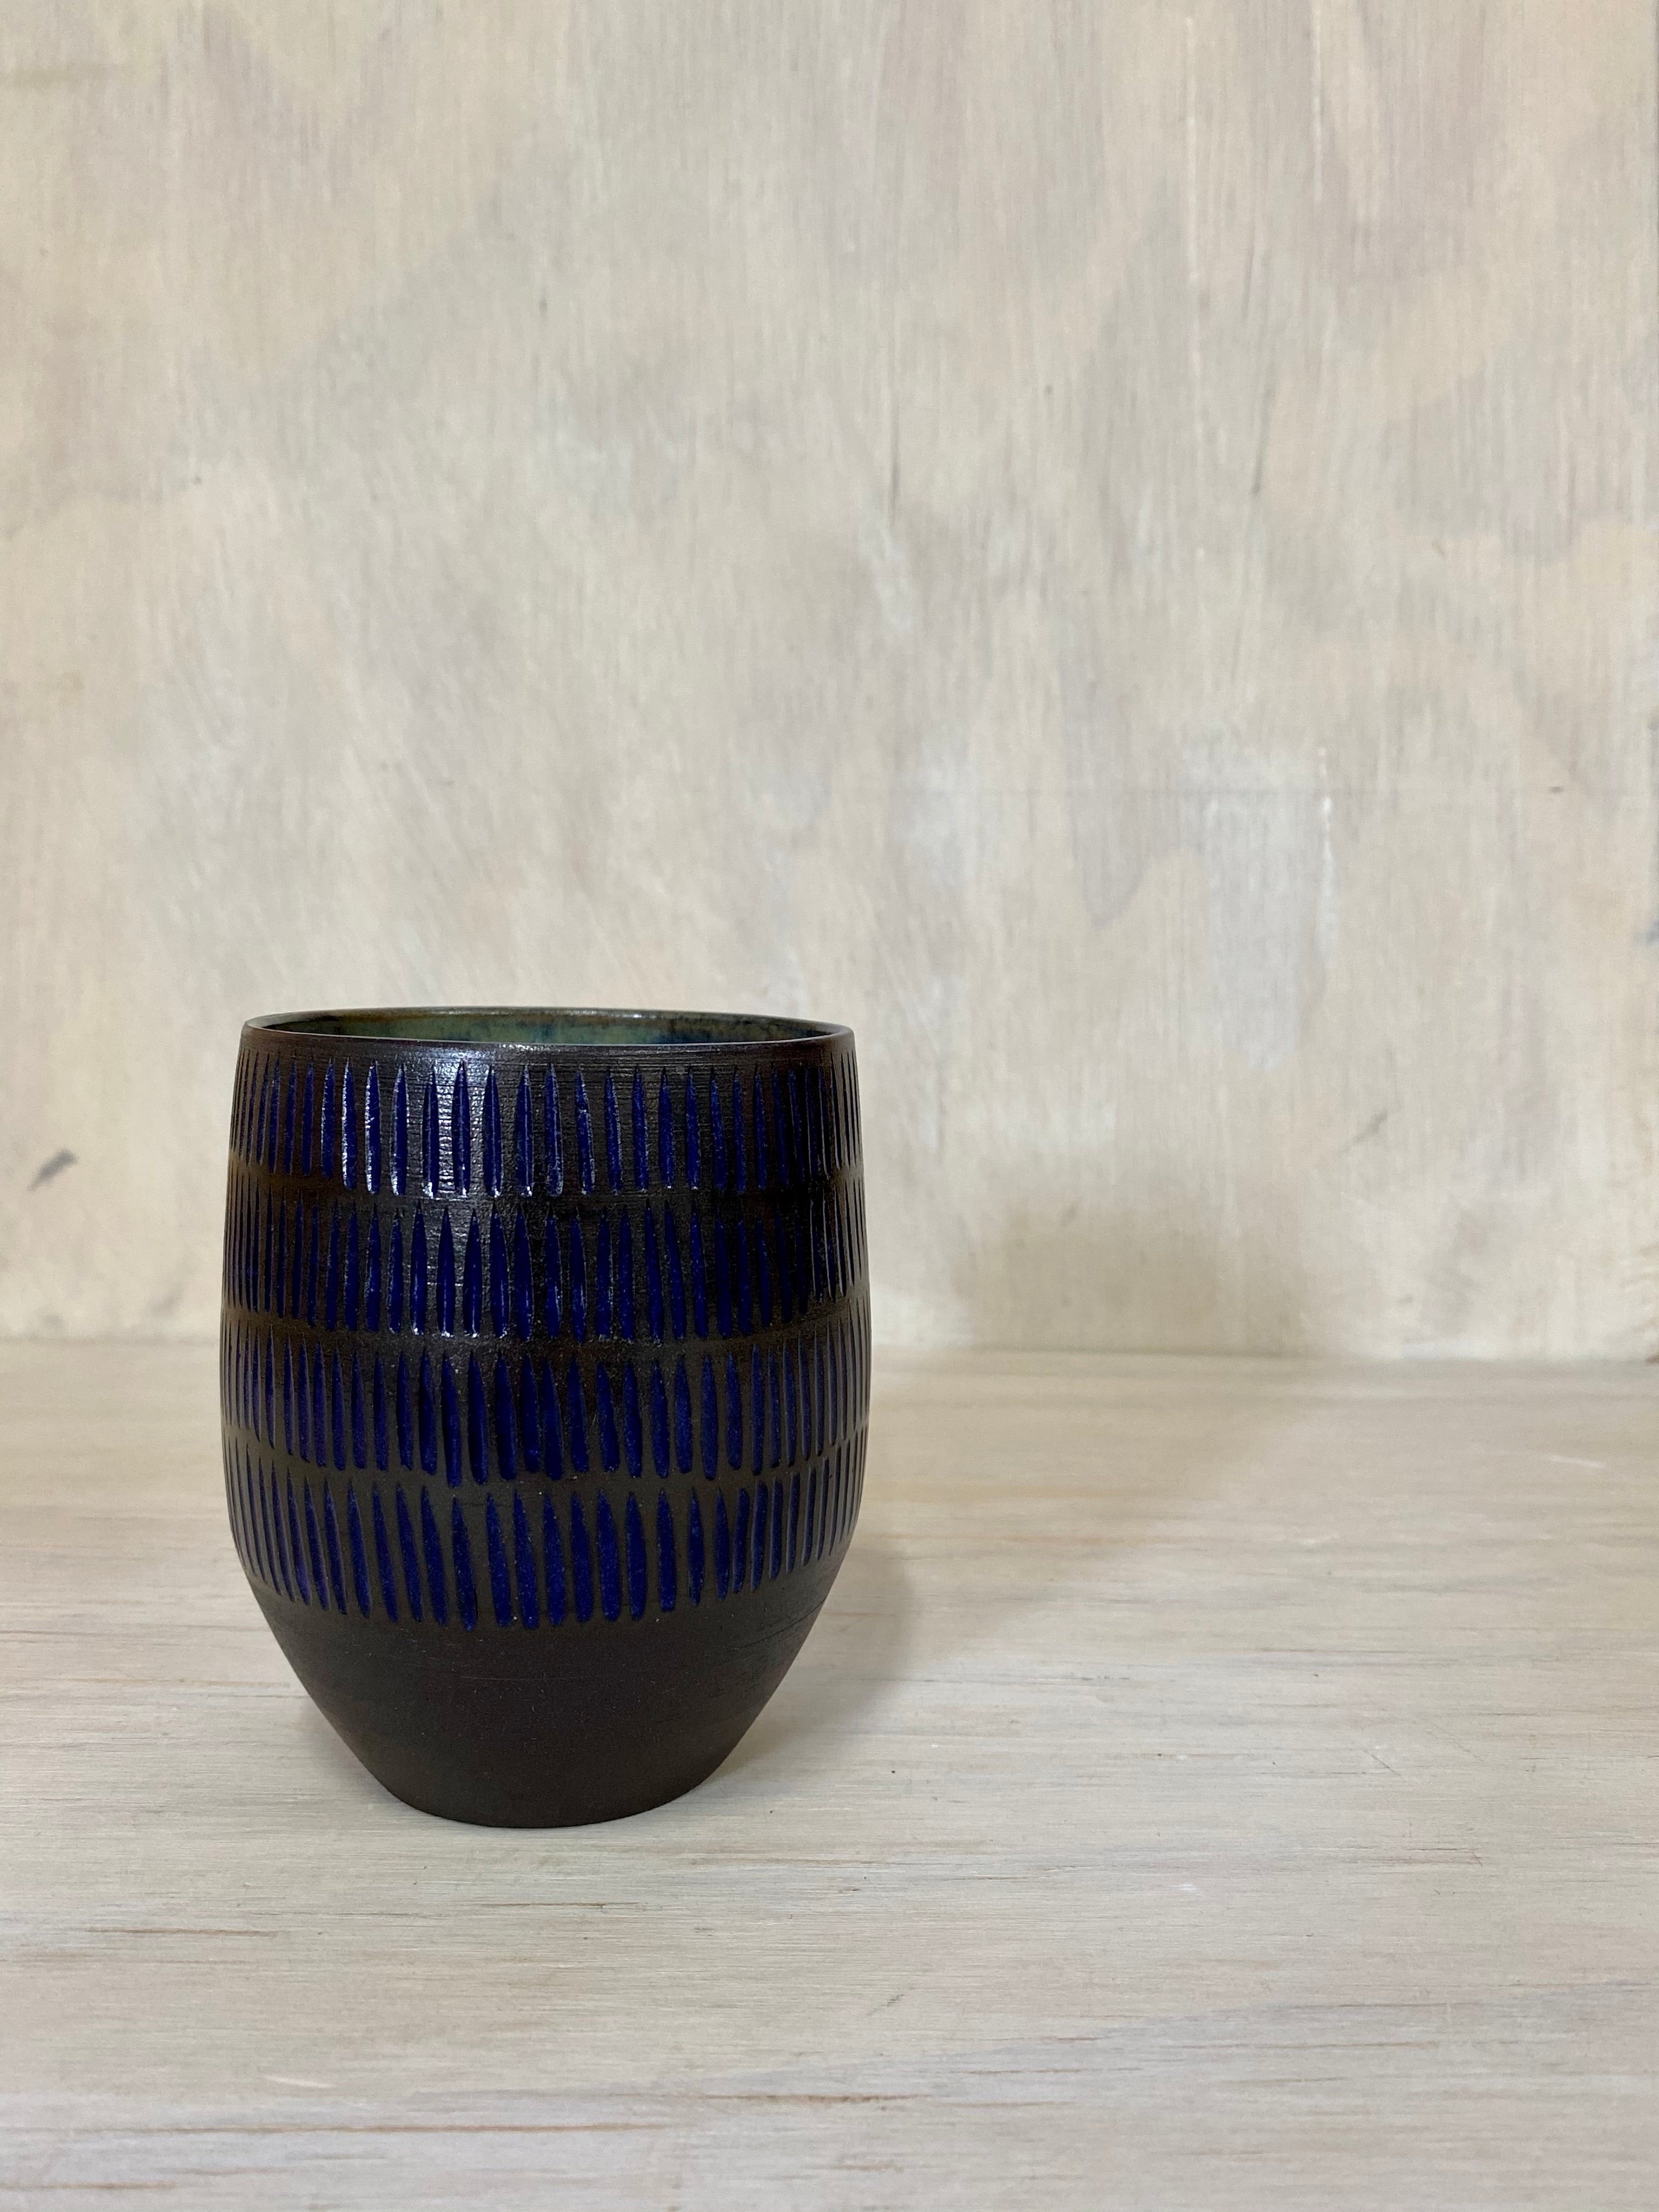 Textured Blue multipurpose cup - seconds